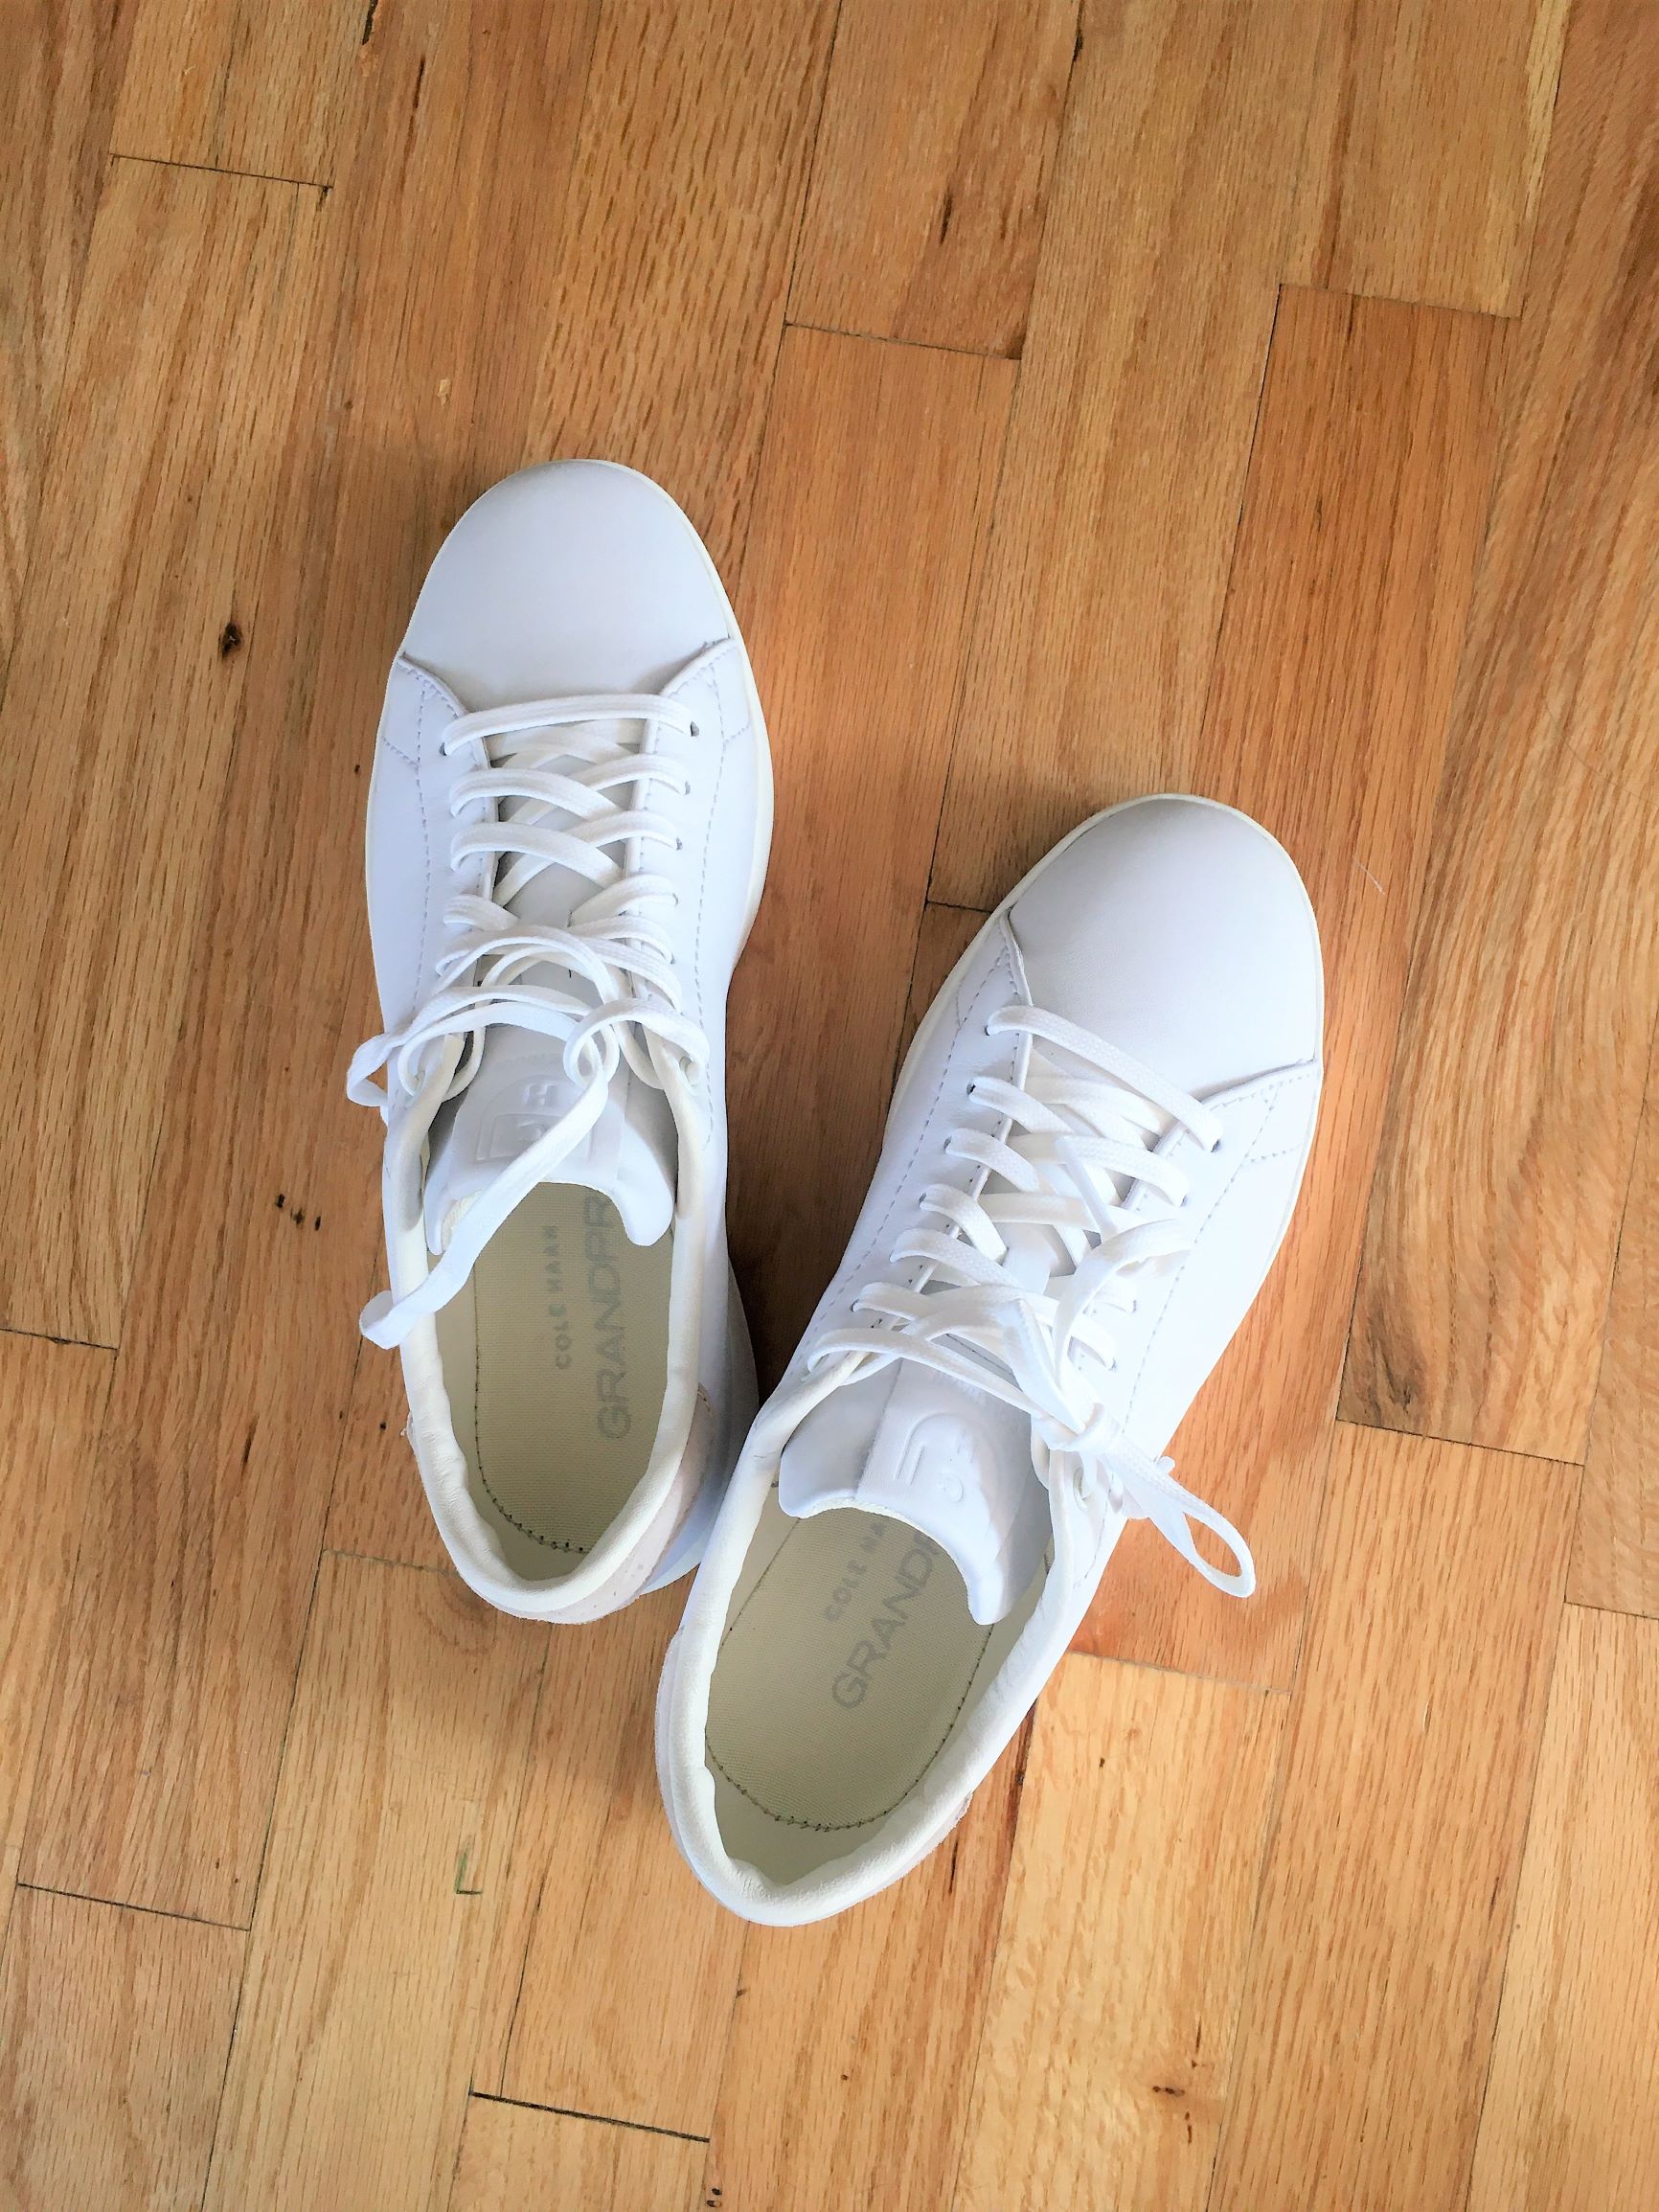 Cole Haan GrandPro Sneakers Review 